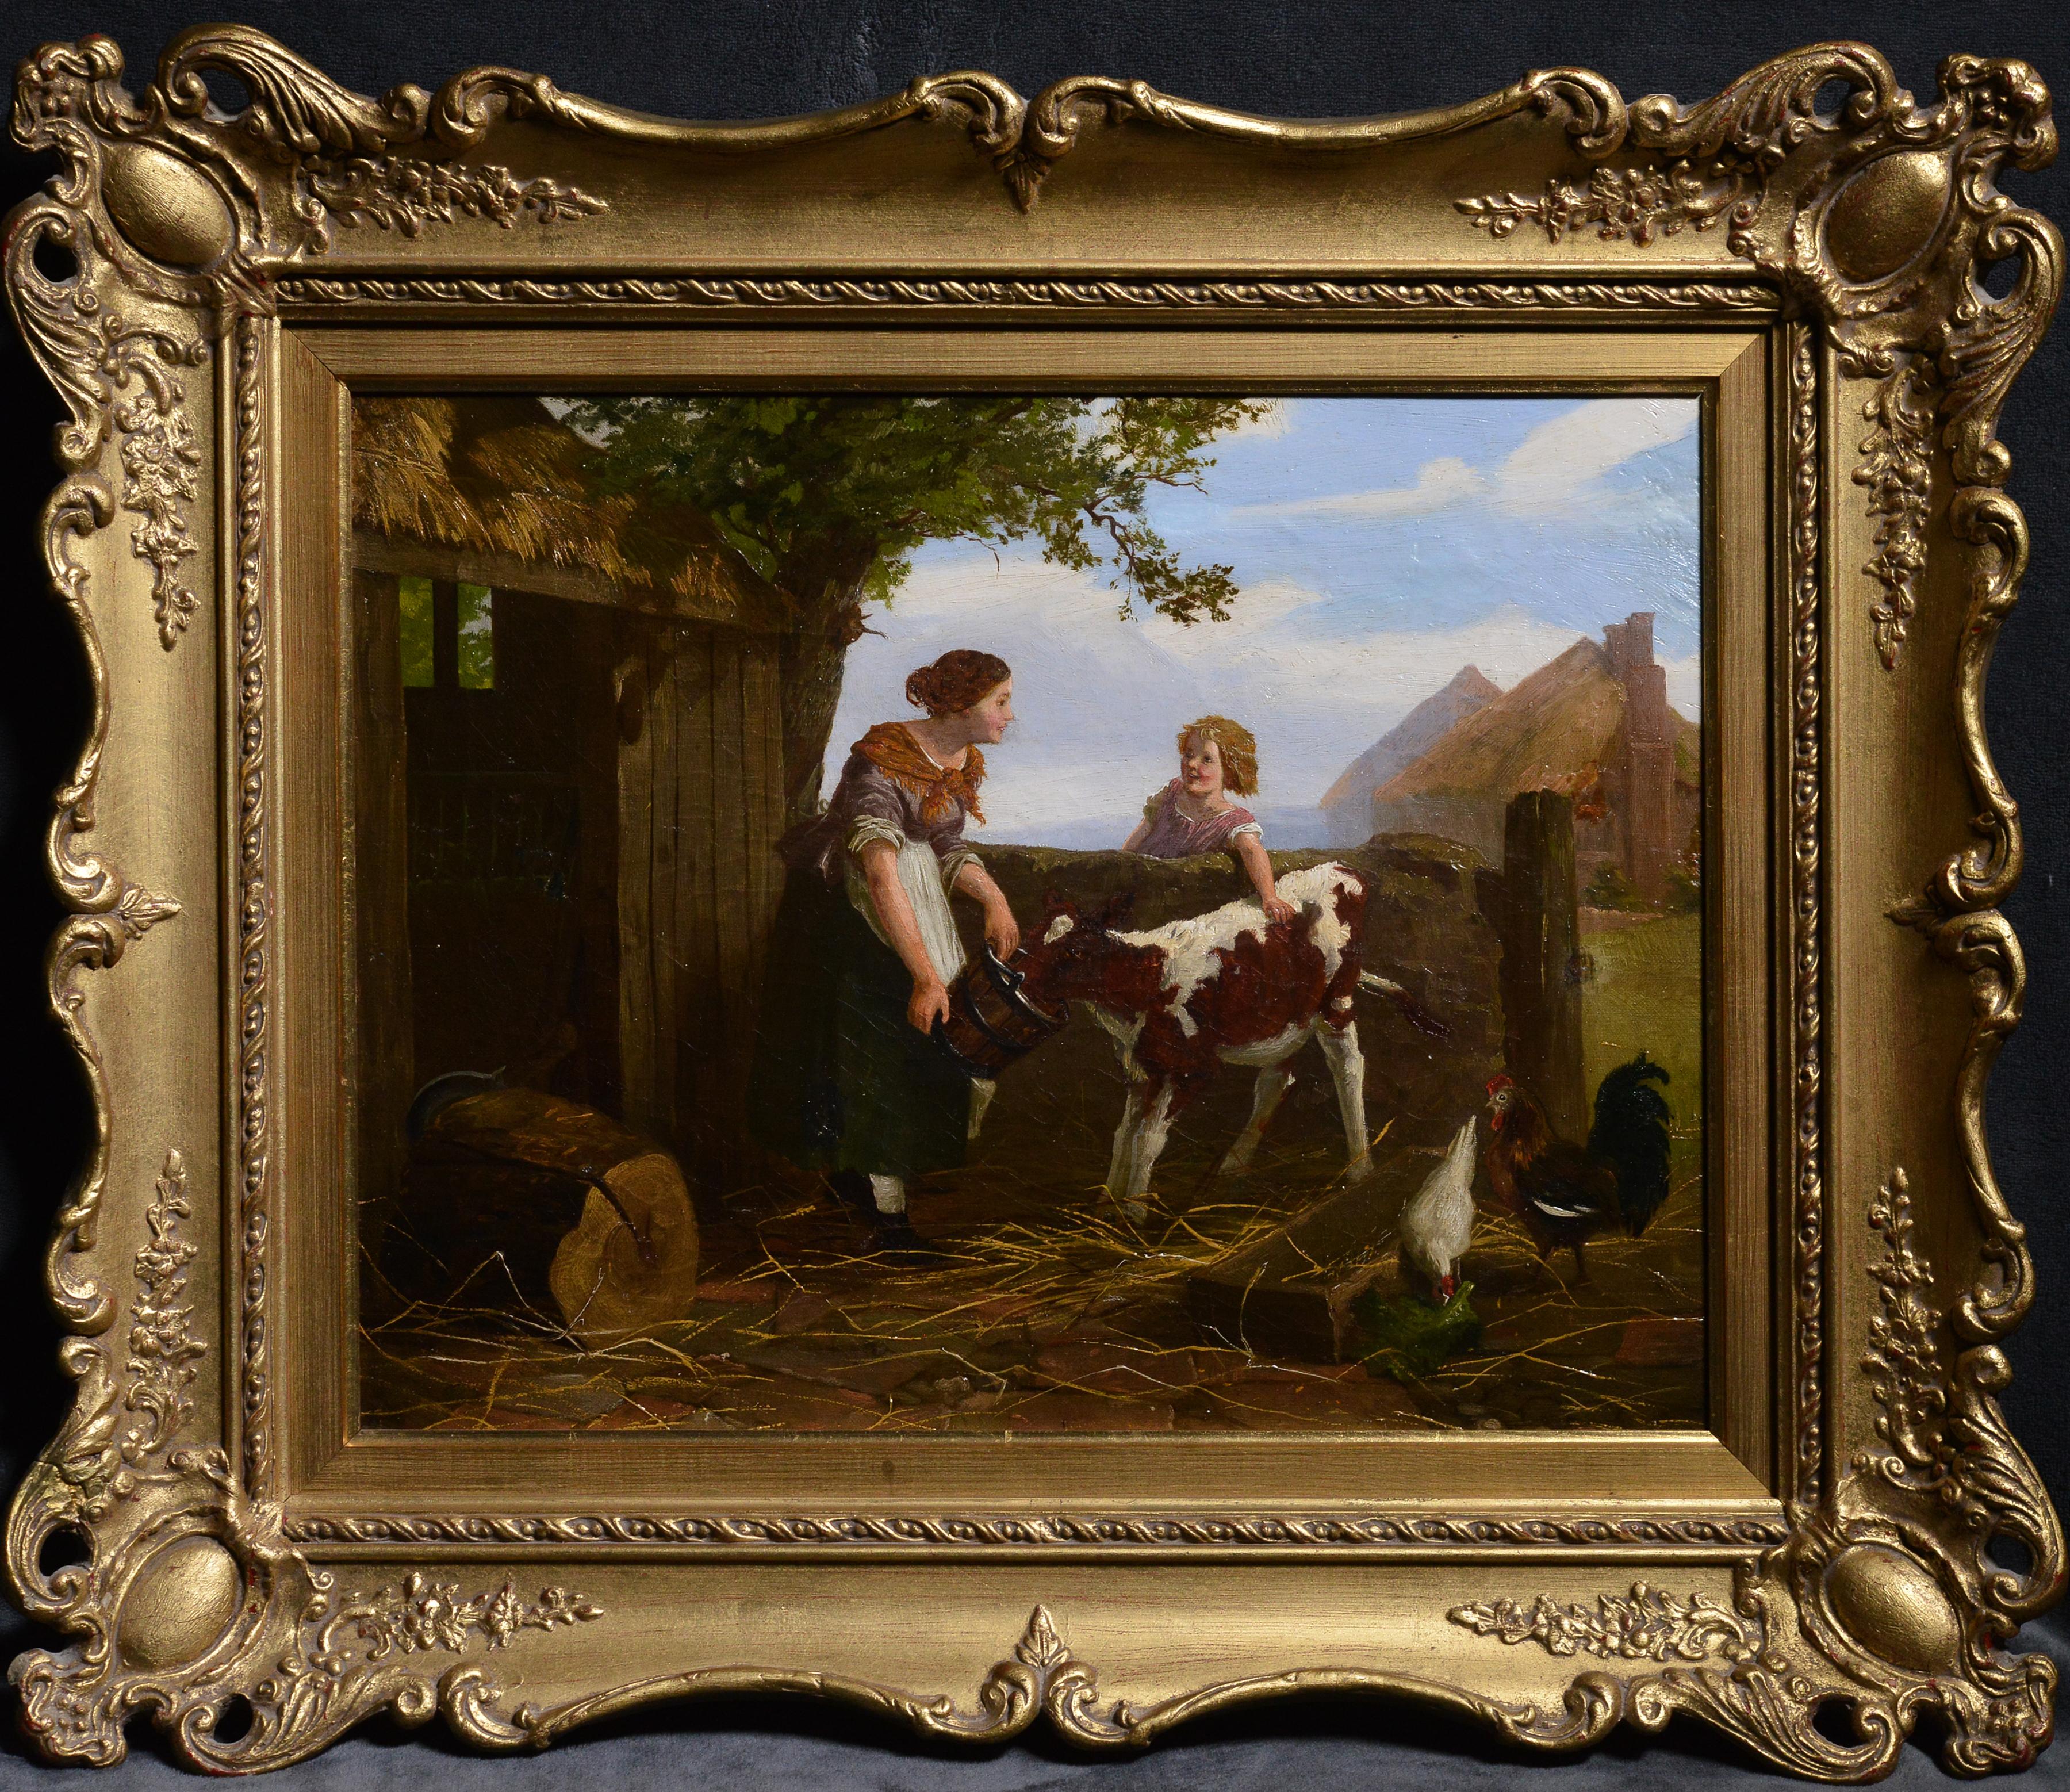 Feeding a Calf Lovely Farm Scene with Redhead Girl mid 19th Century Oil Painting